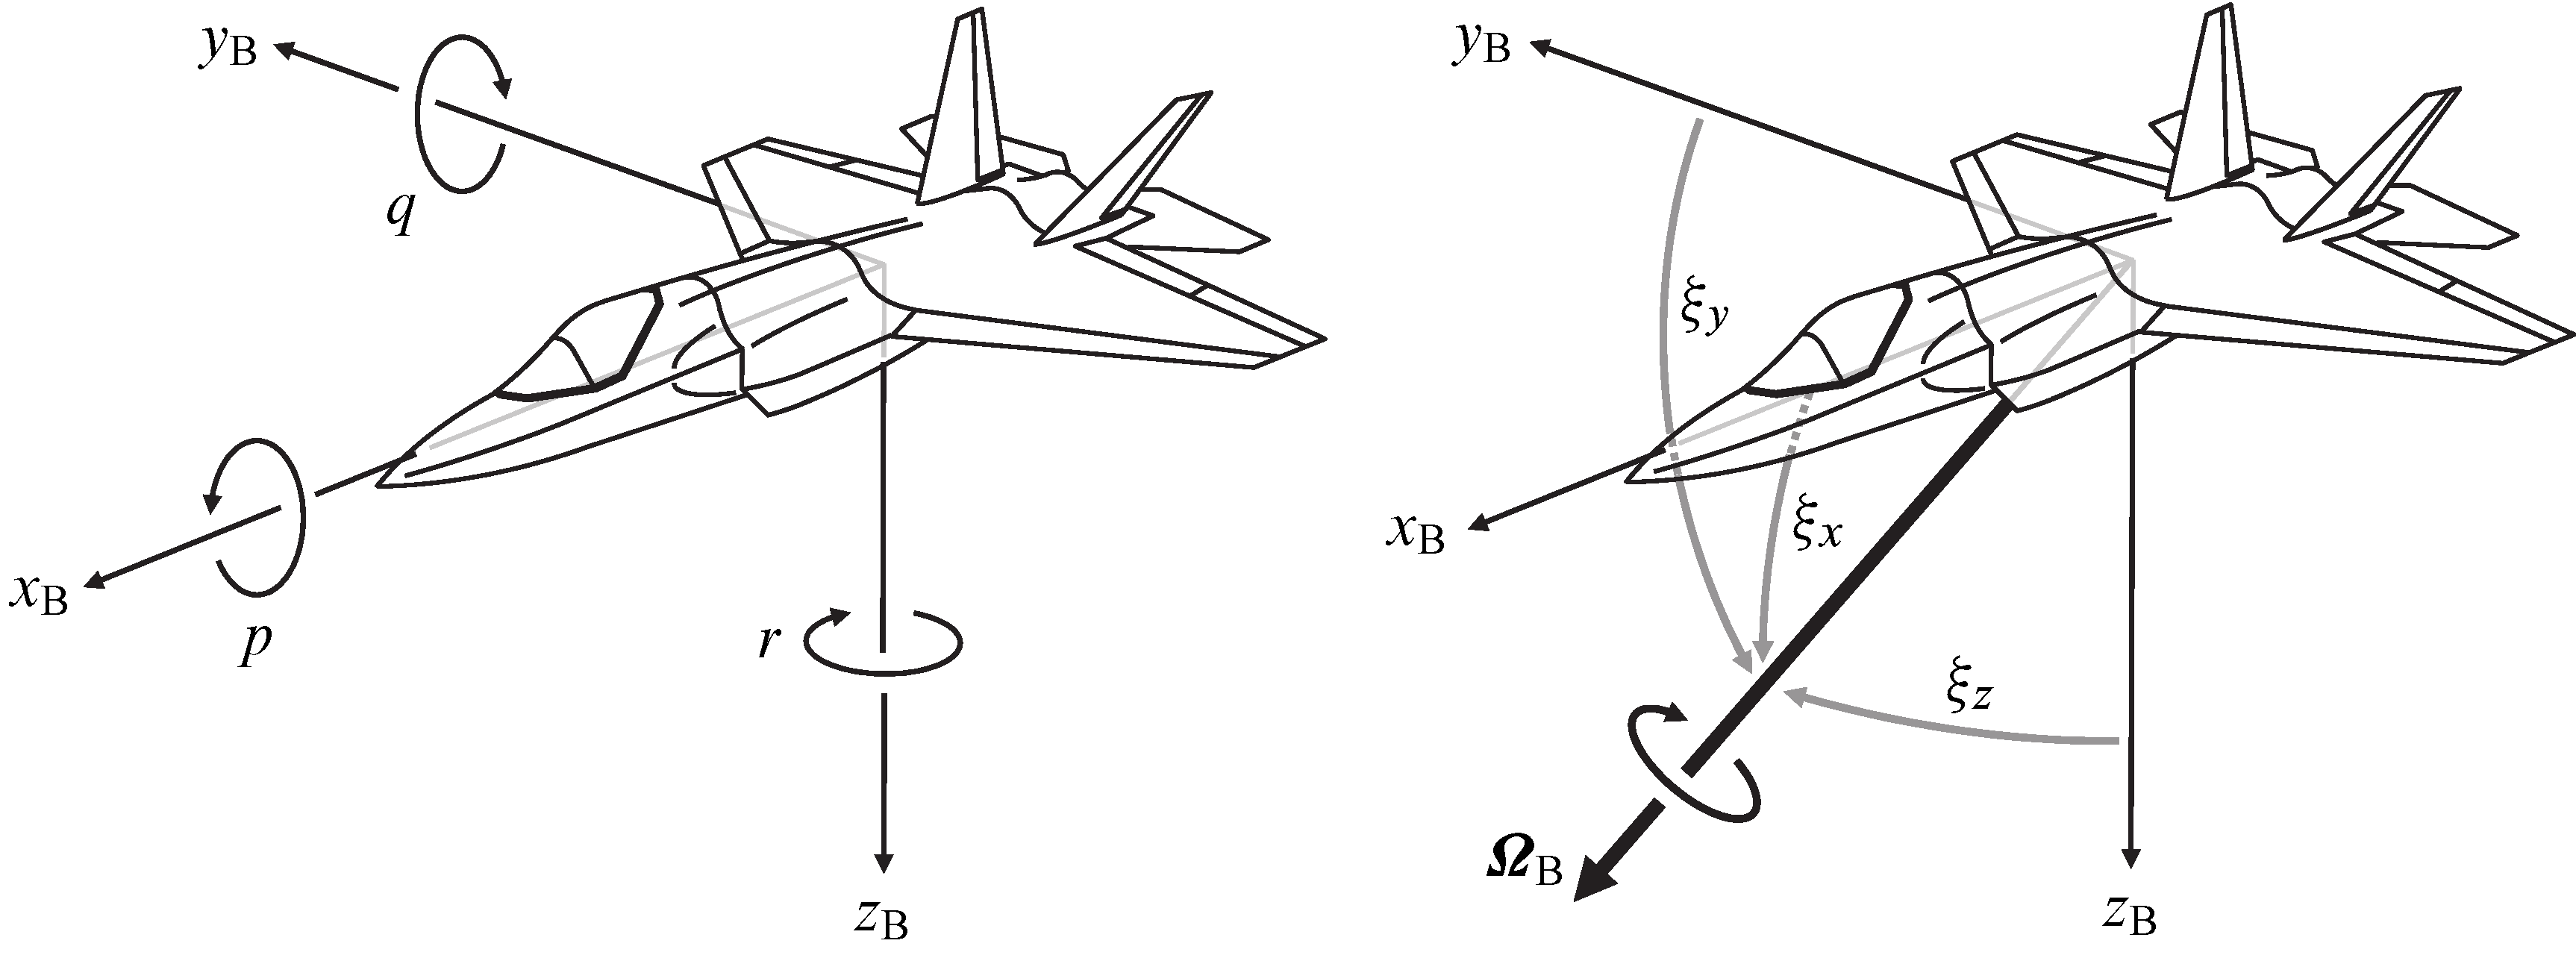 Body-axis components of aircraft angular velocity $\mathbf{\Omega}$.